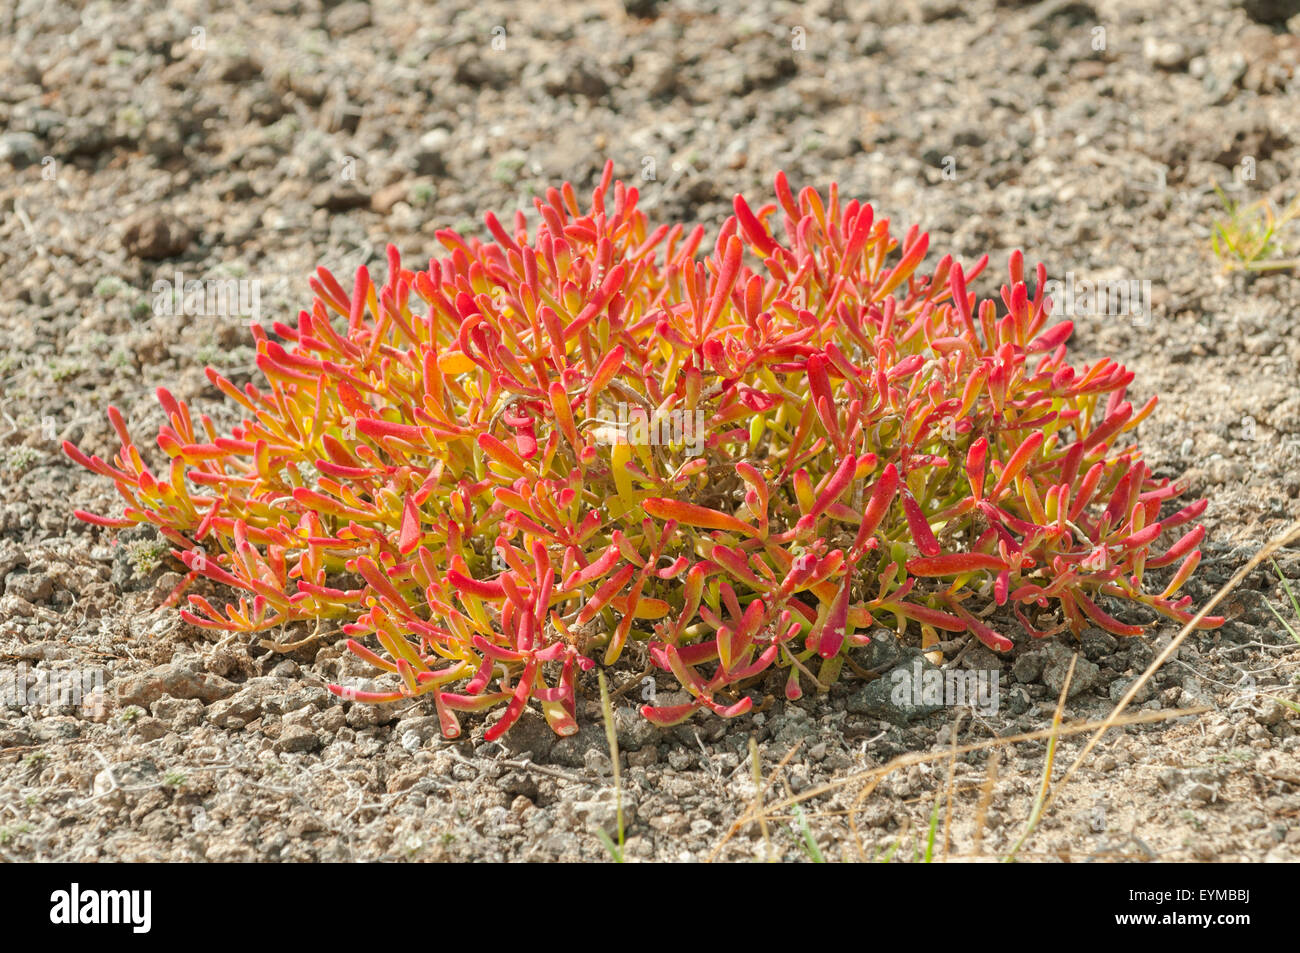 Galapagos islands flora fotografías e imágenes de alta resolución - Alamy